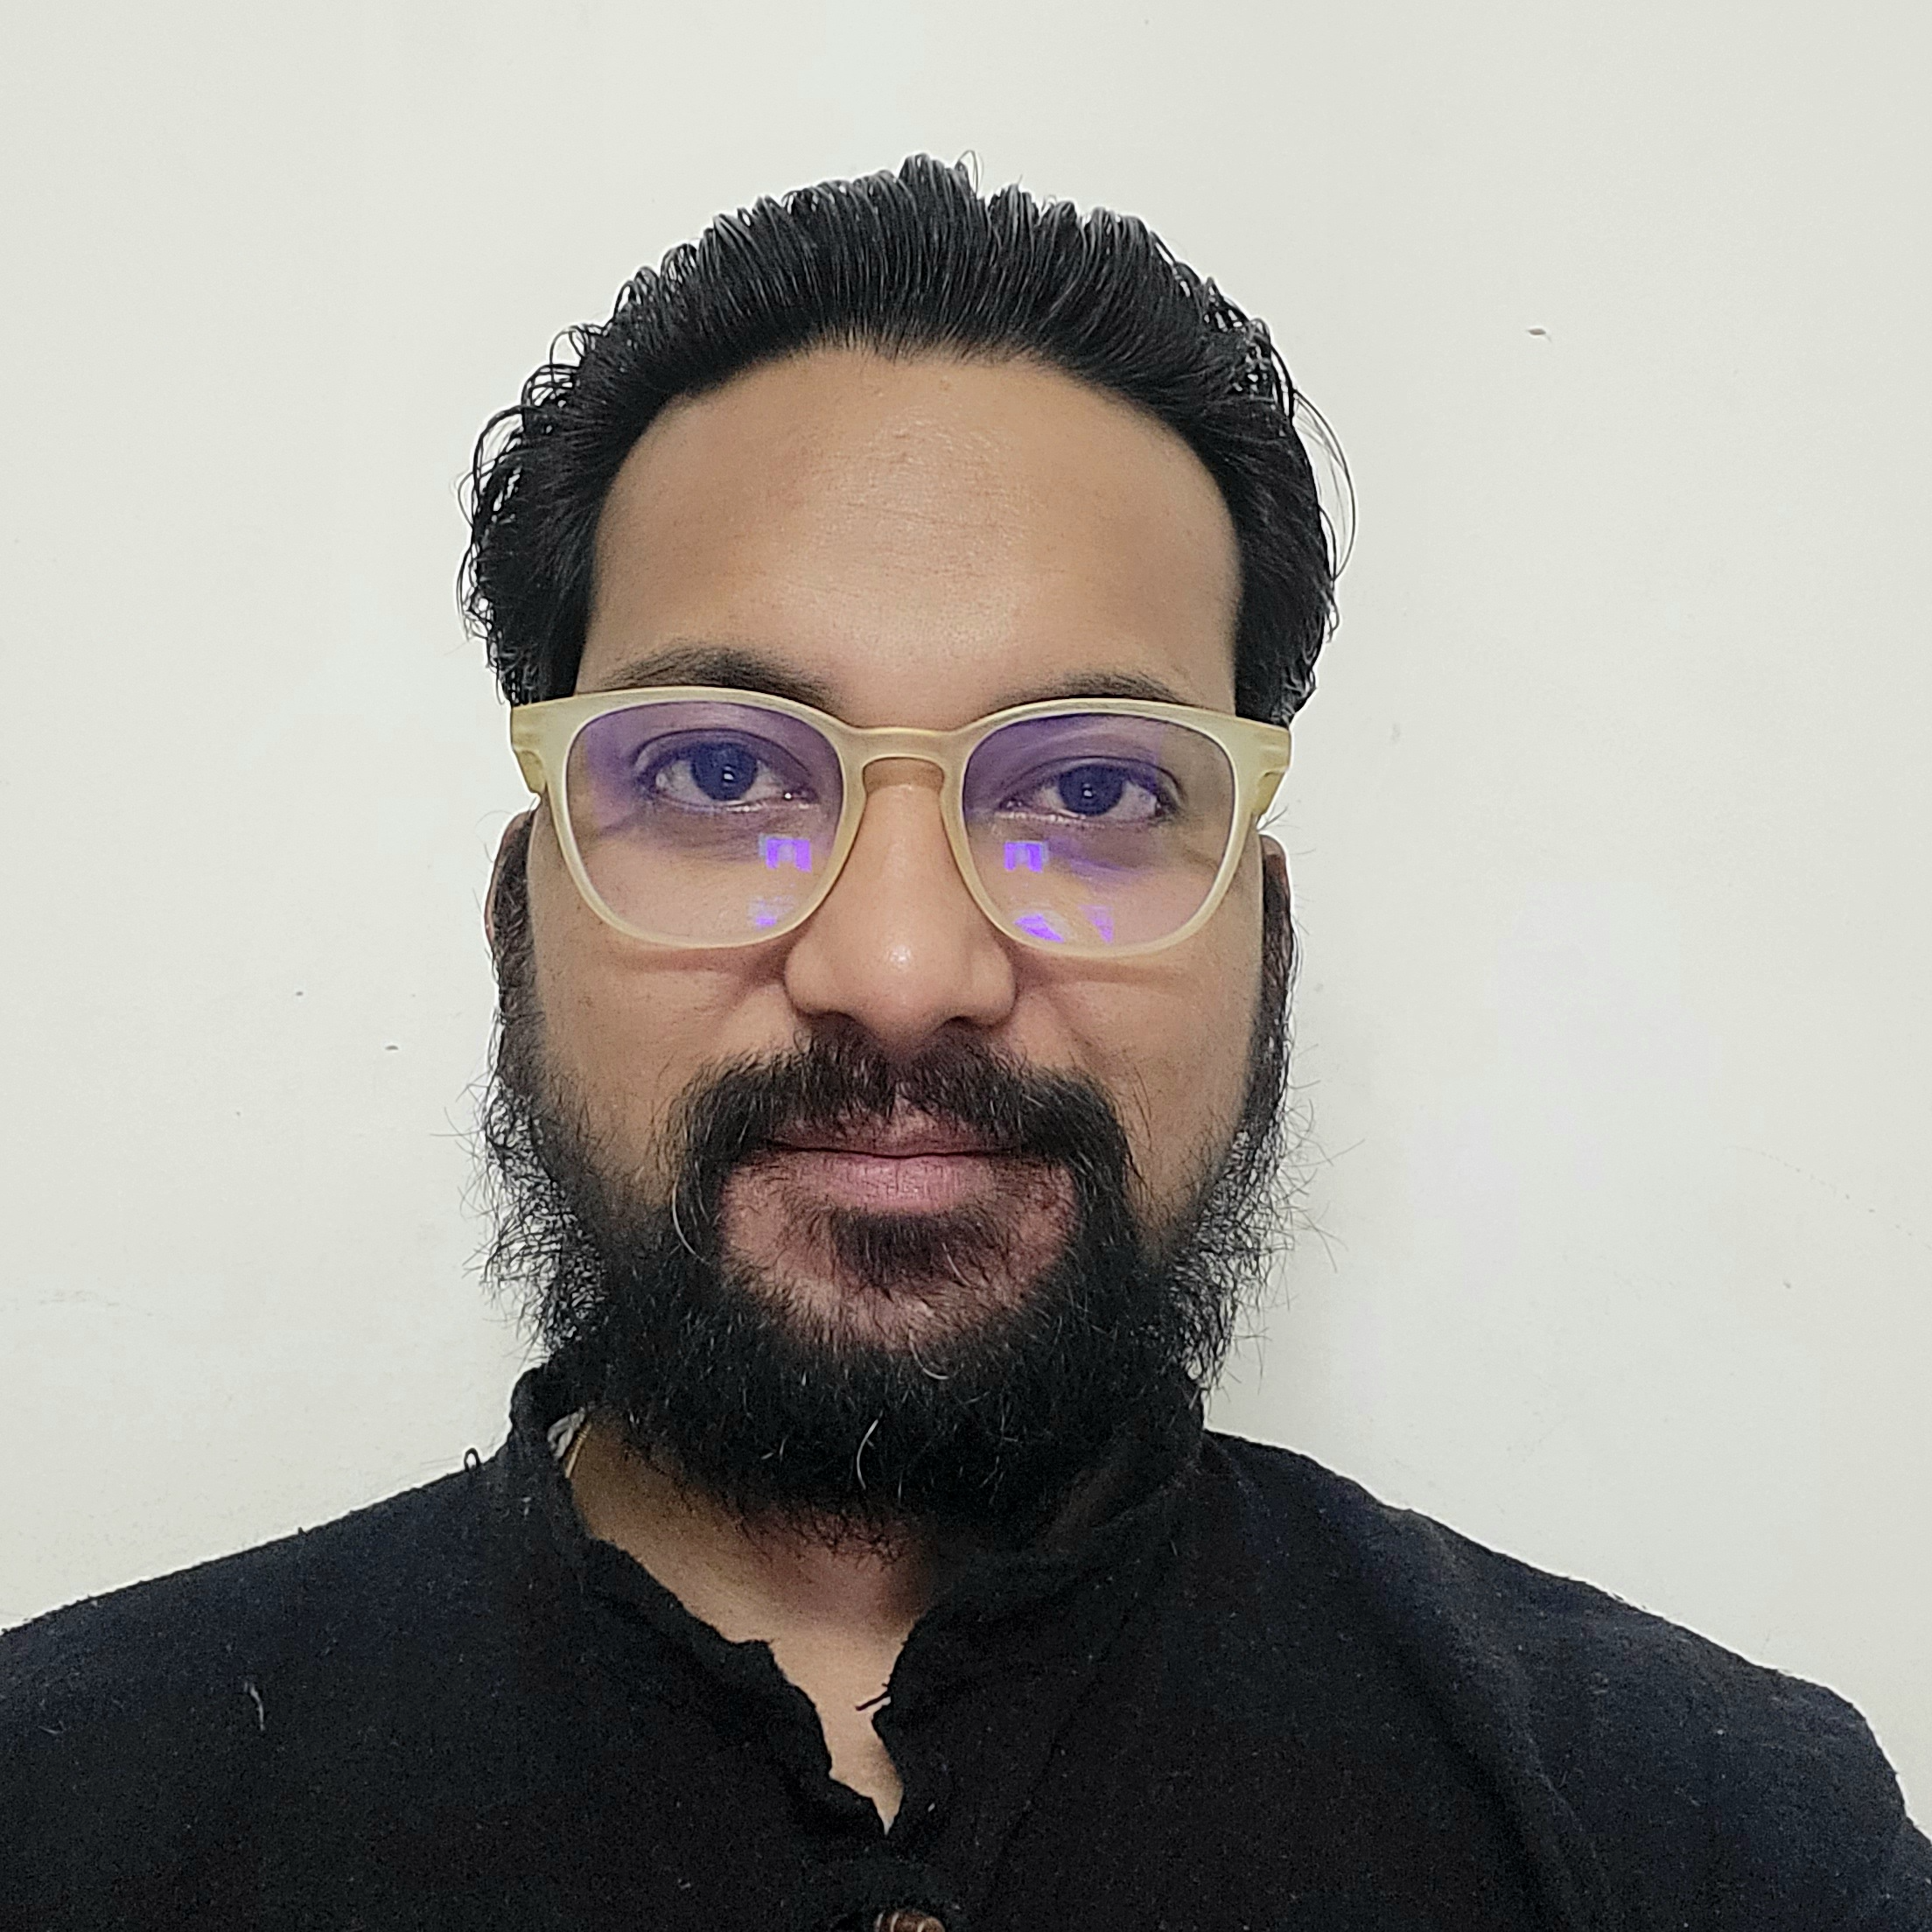 Anil Singh Negi profile avatar